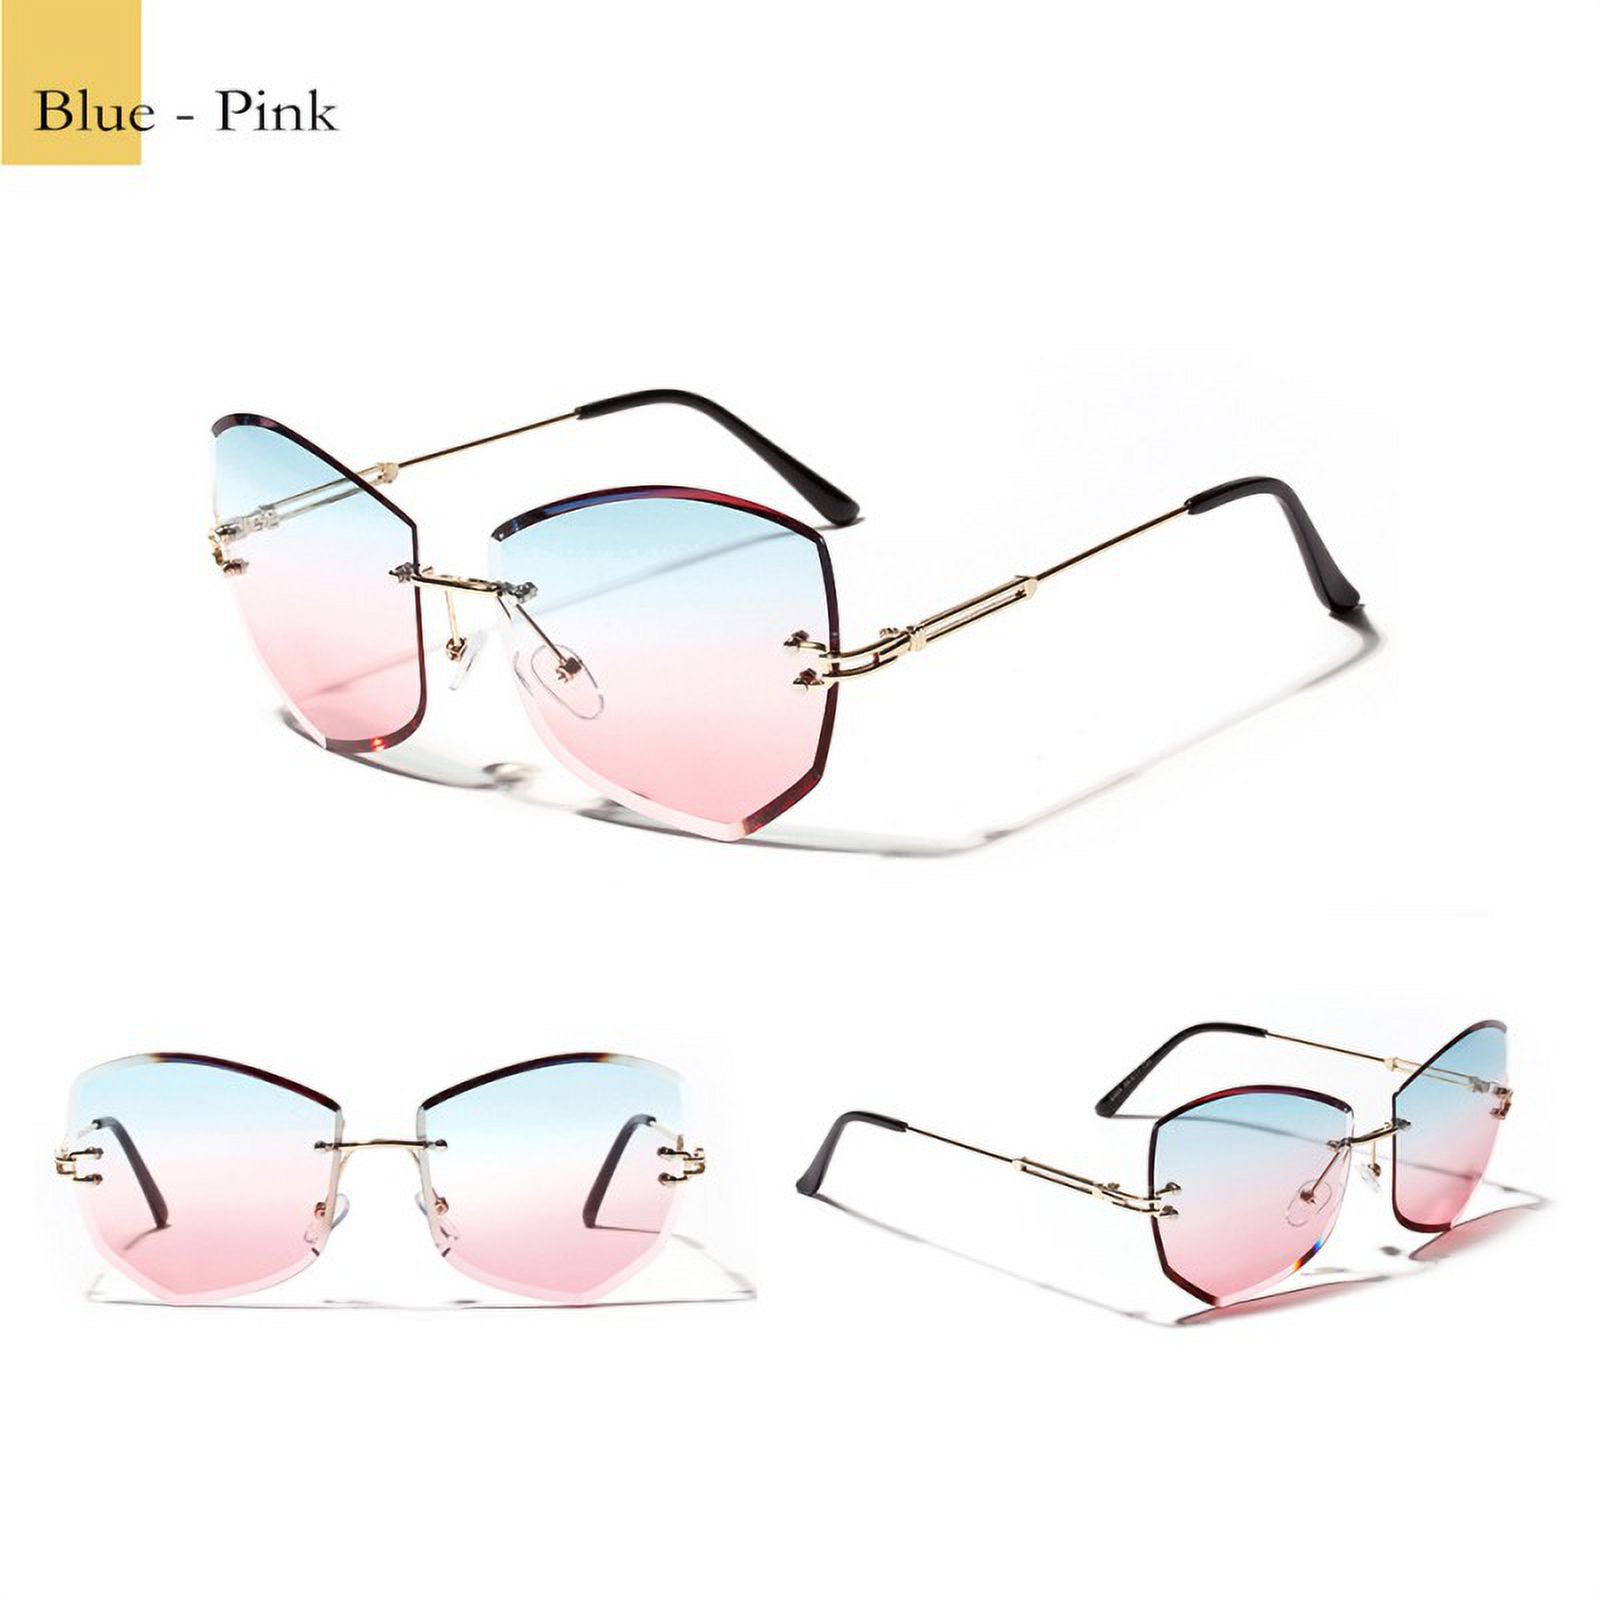 Women Shades Rimless Sunglasses Cat Eye Diamond-shaped Lens Sunglass Metal Frame Sunglasses for Women Men - image 4 of 4